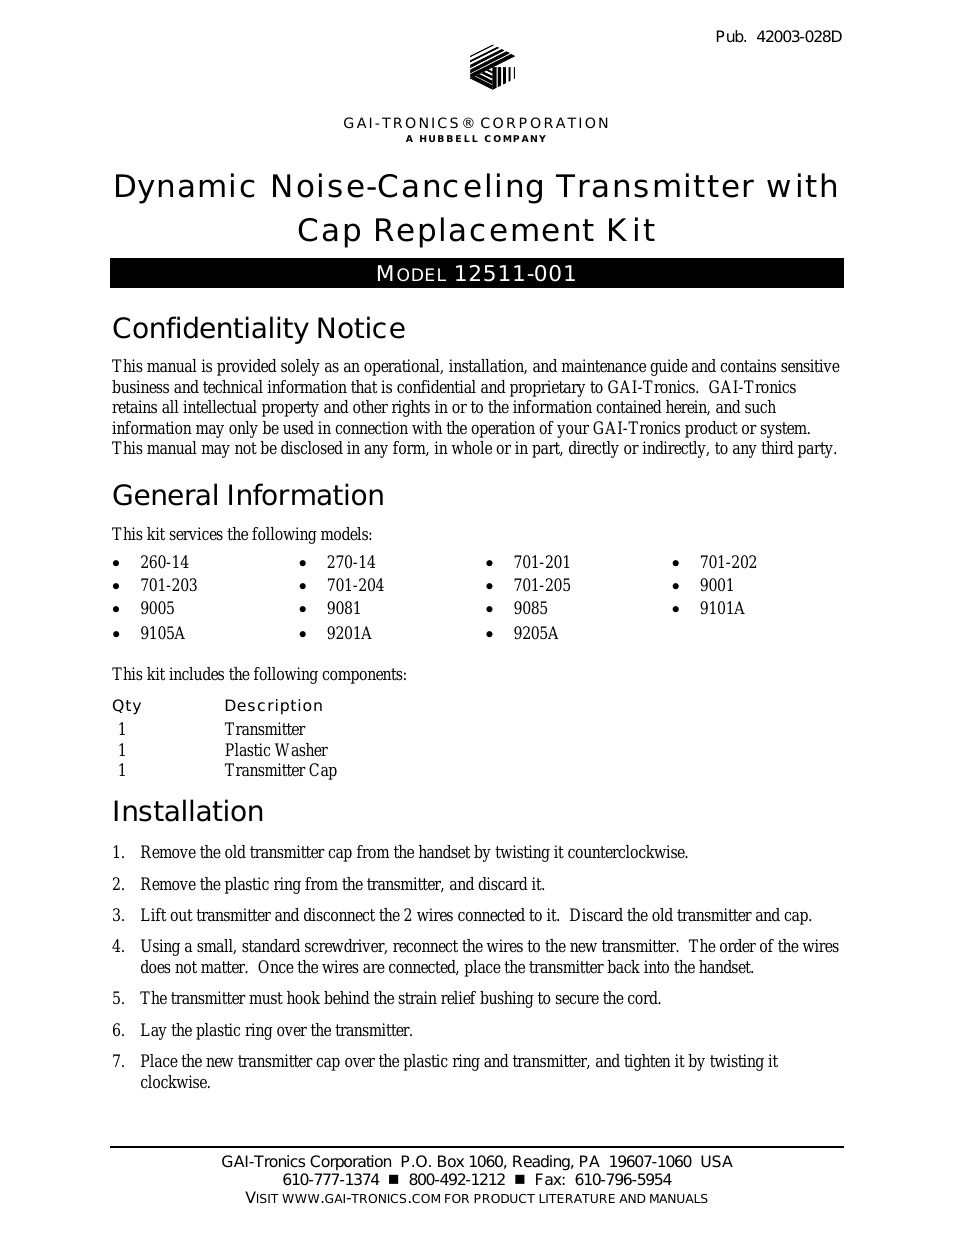 12511-001 Dynamic Transmitter (NC) w/Cap